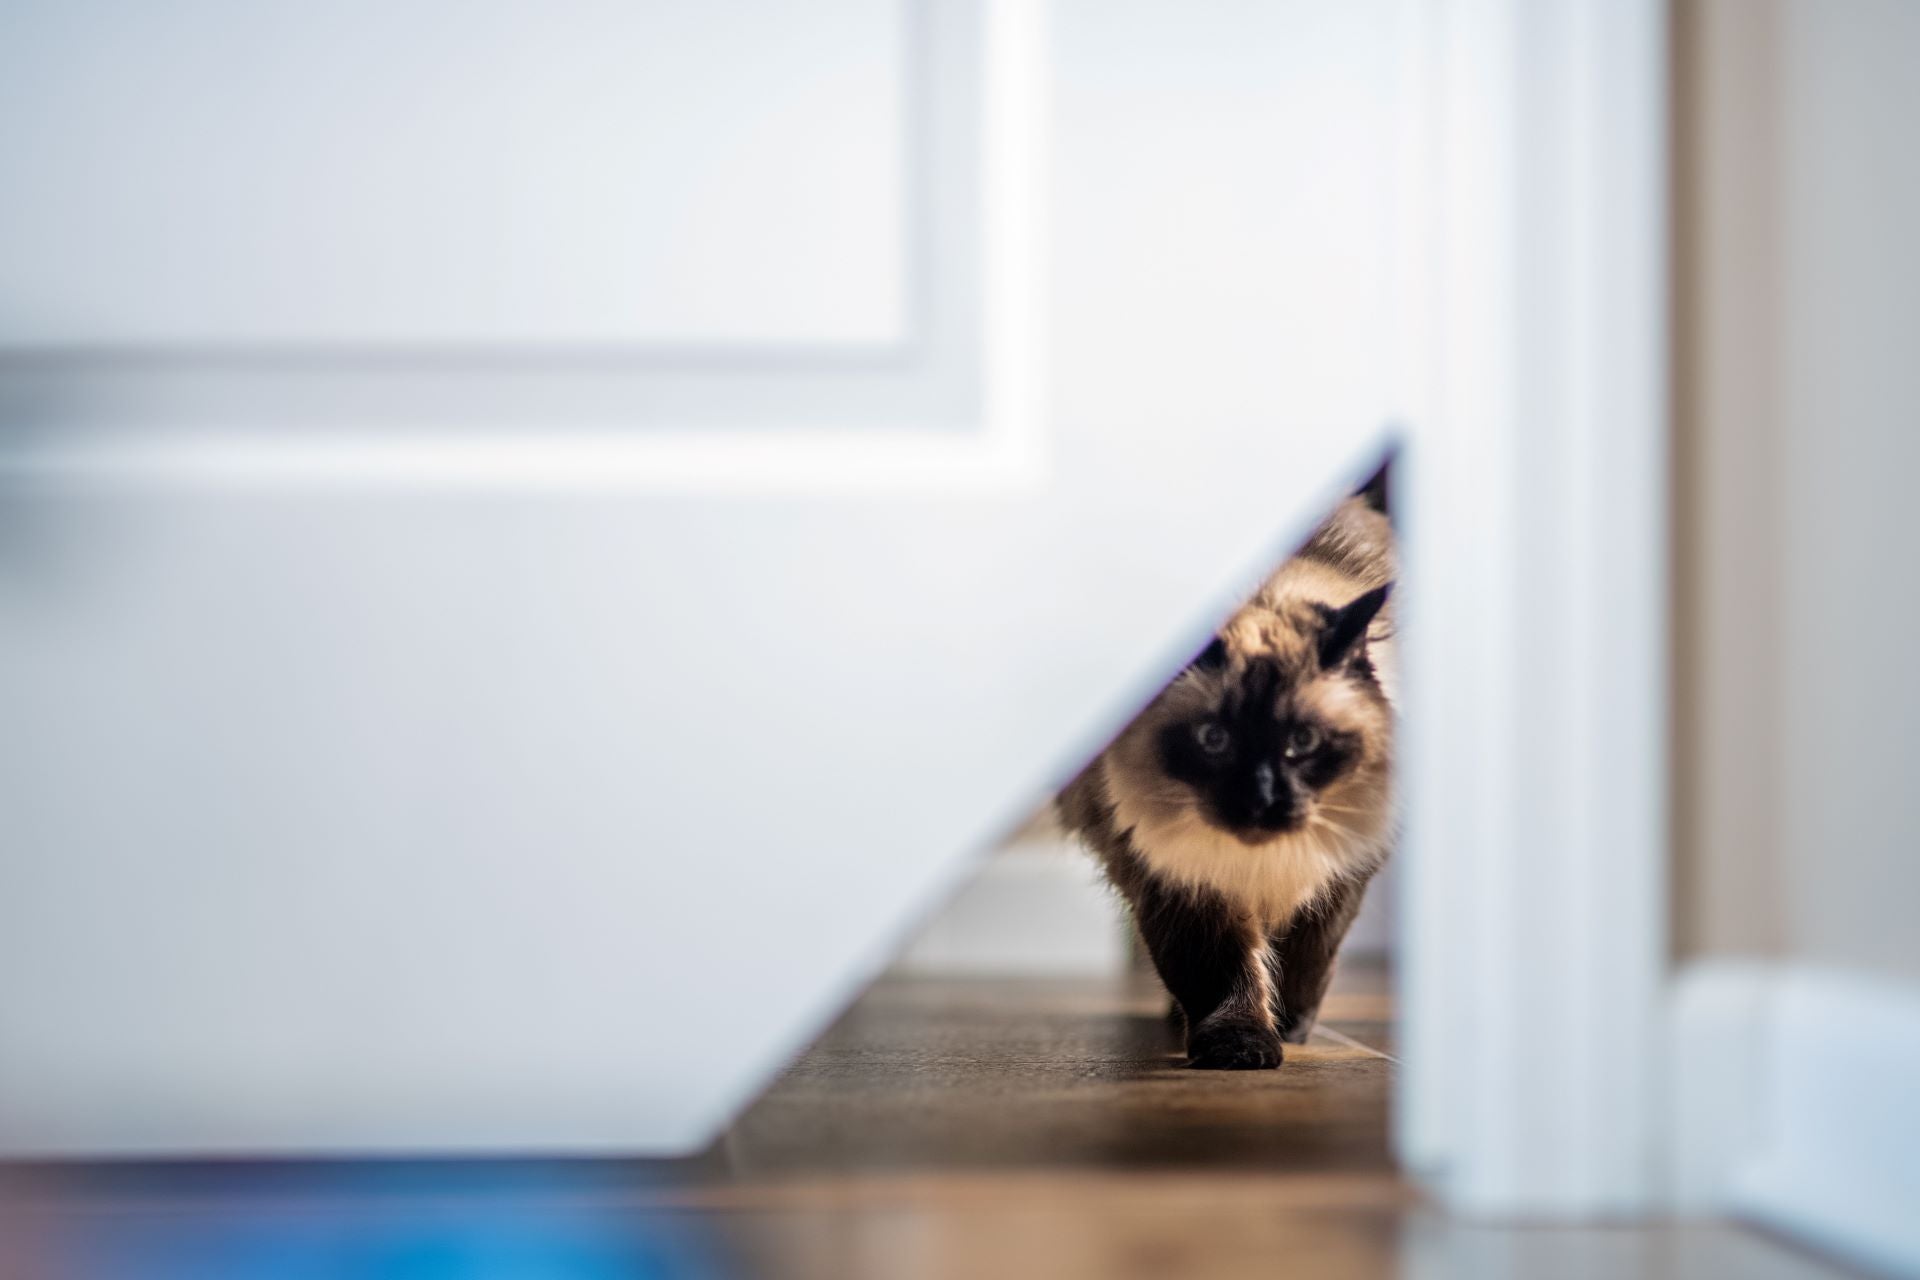 Load video: Big Siamese cat though cat door